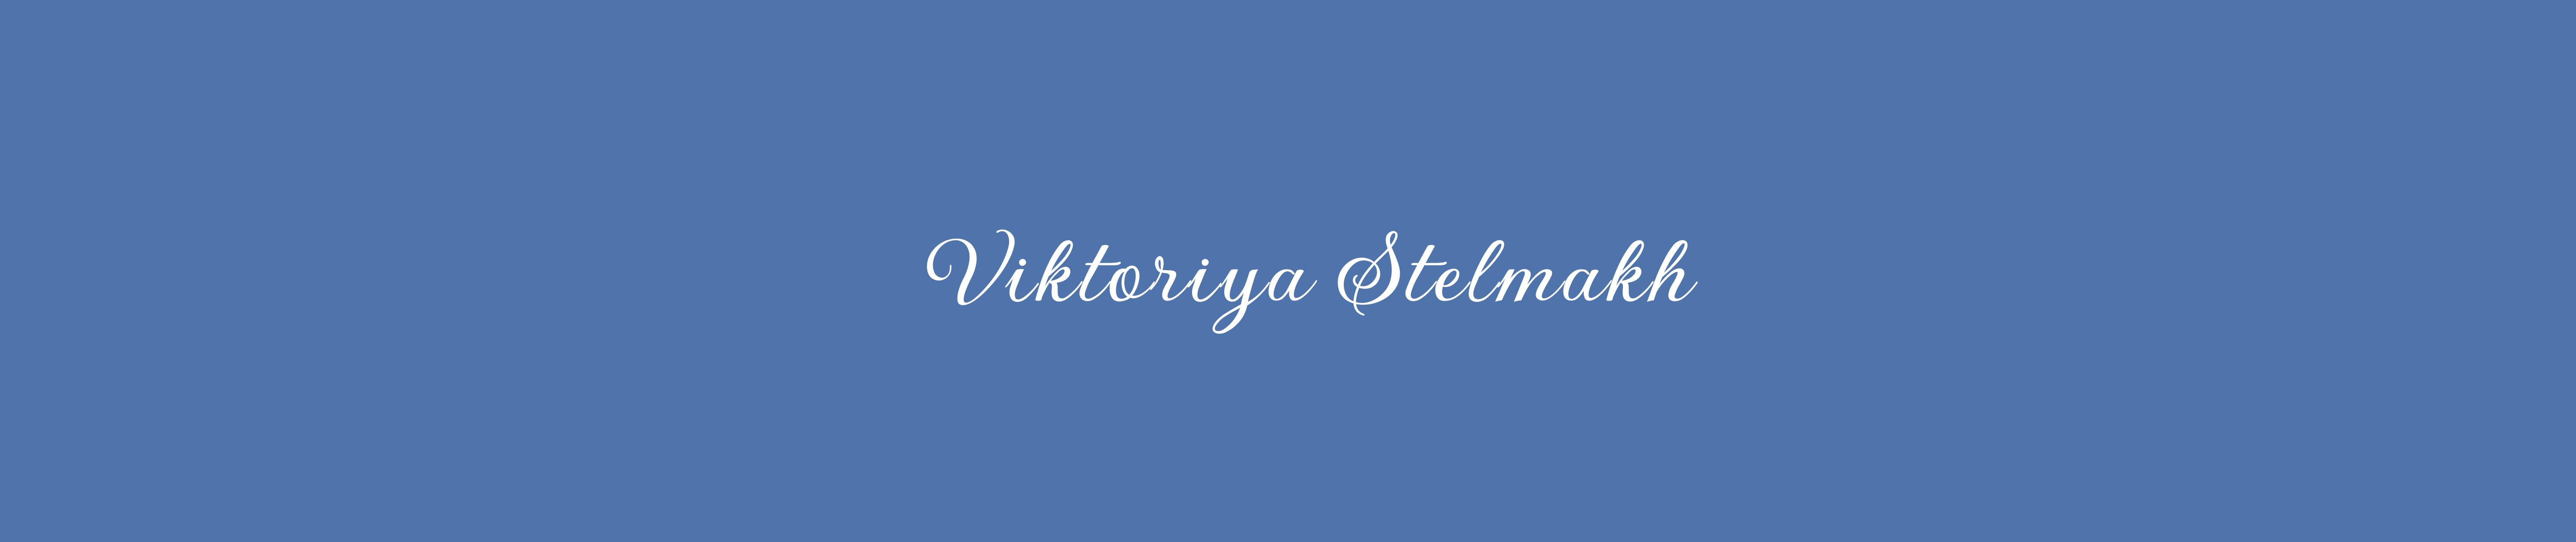 Viktoryia Stelmakhs profilbanner